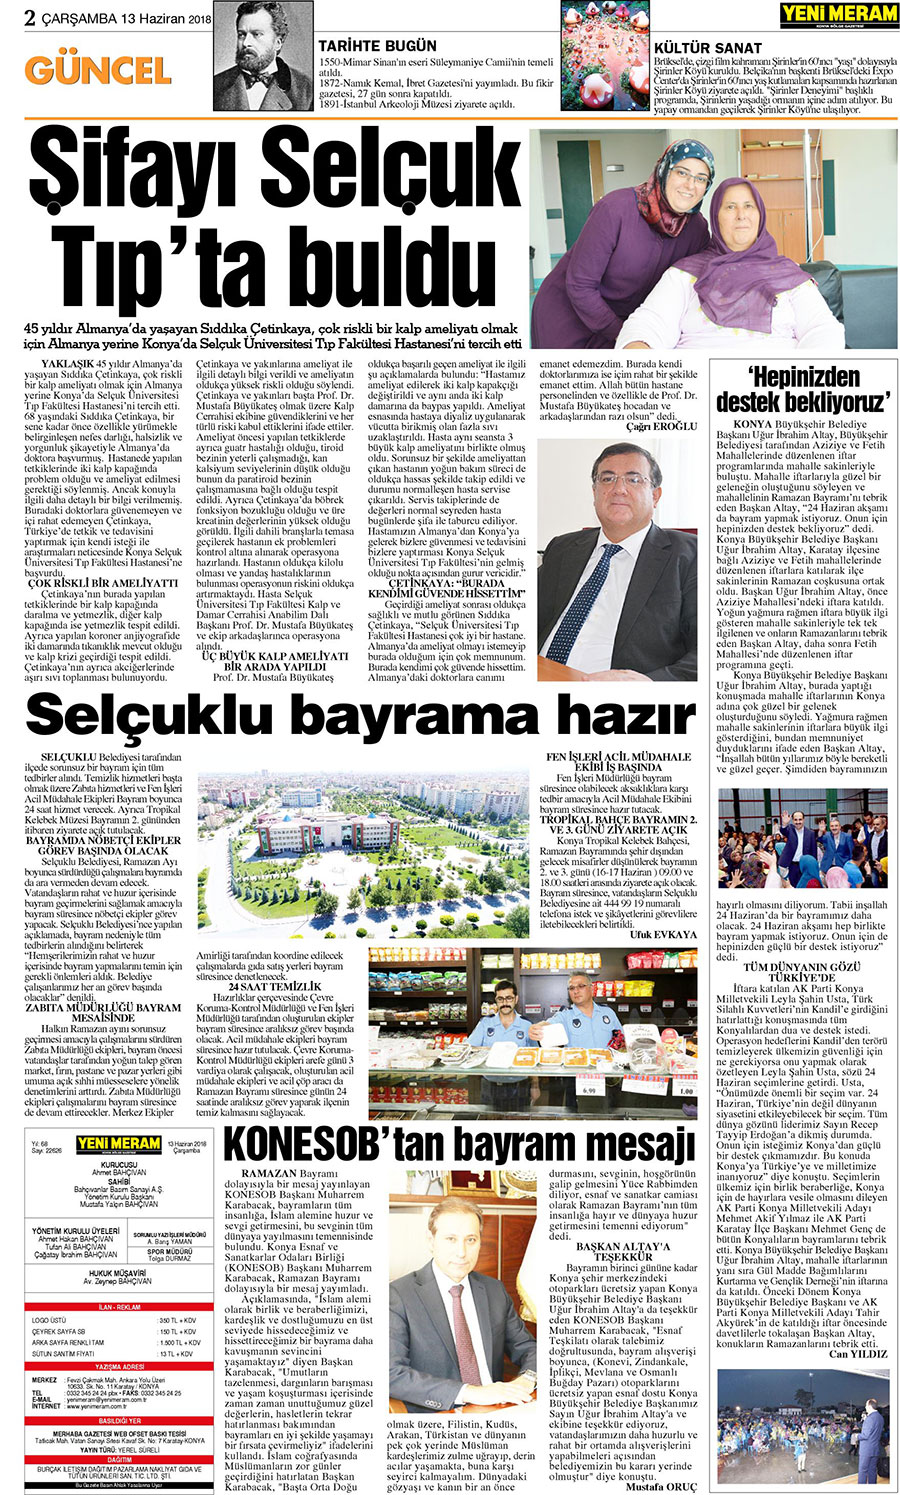 13 Haziran 2018 Yeni Meram Gazetesi